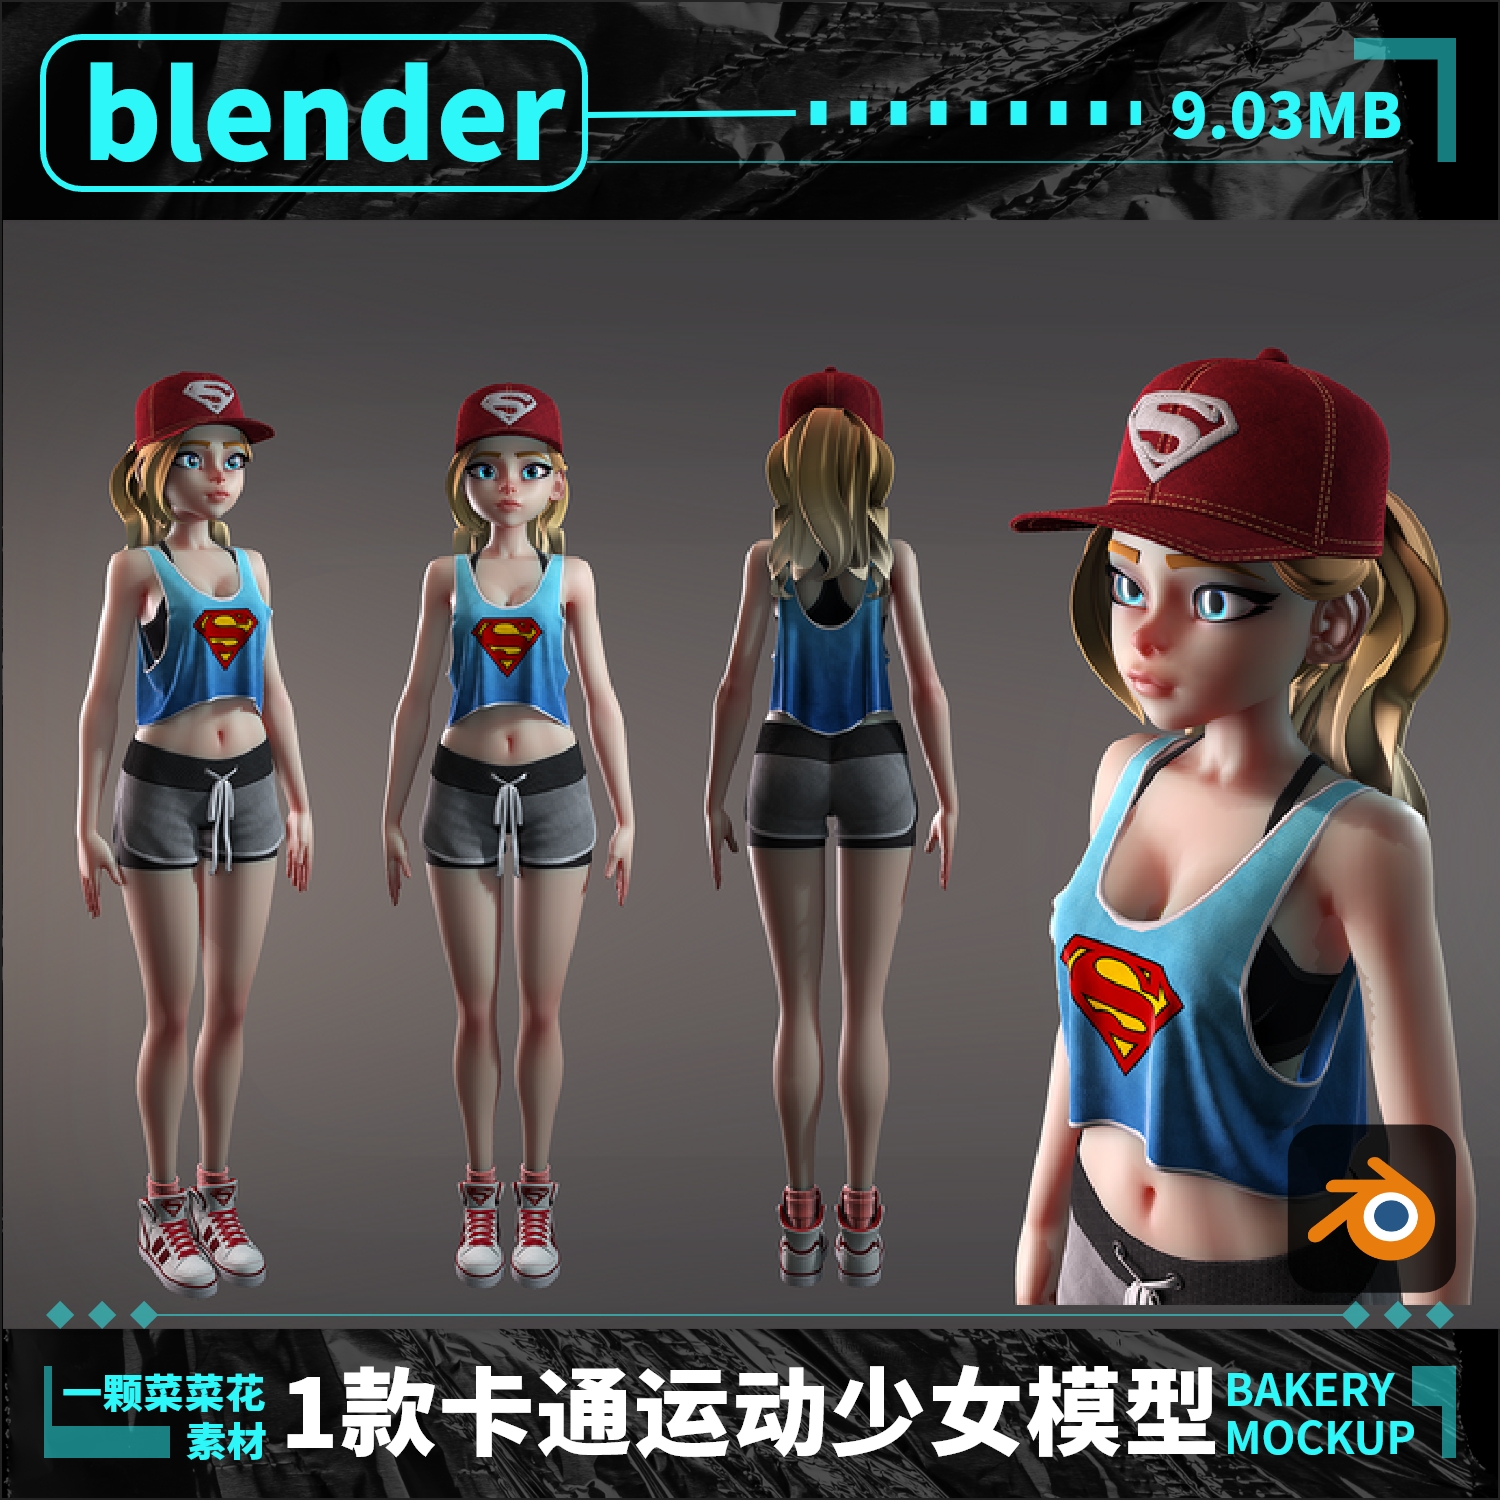 blender卡通少女运动女生角色学生人物模型美漫画风格素材3D A127